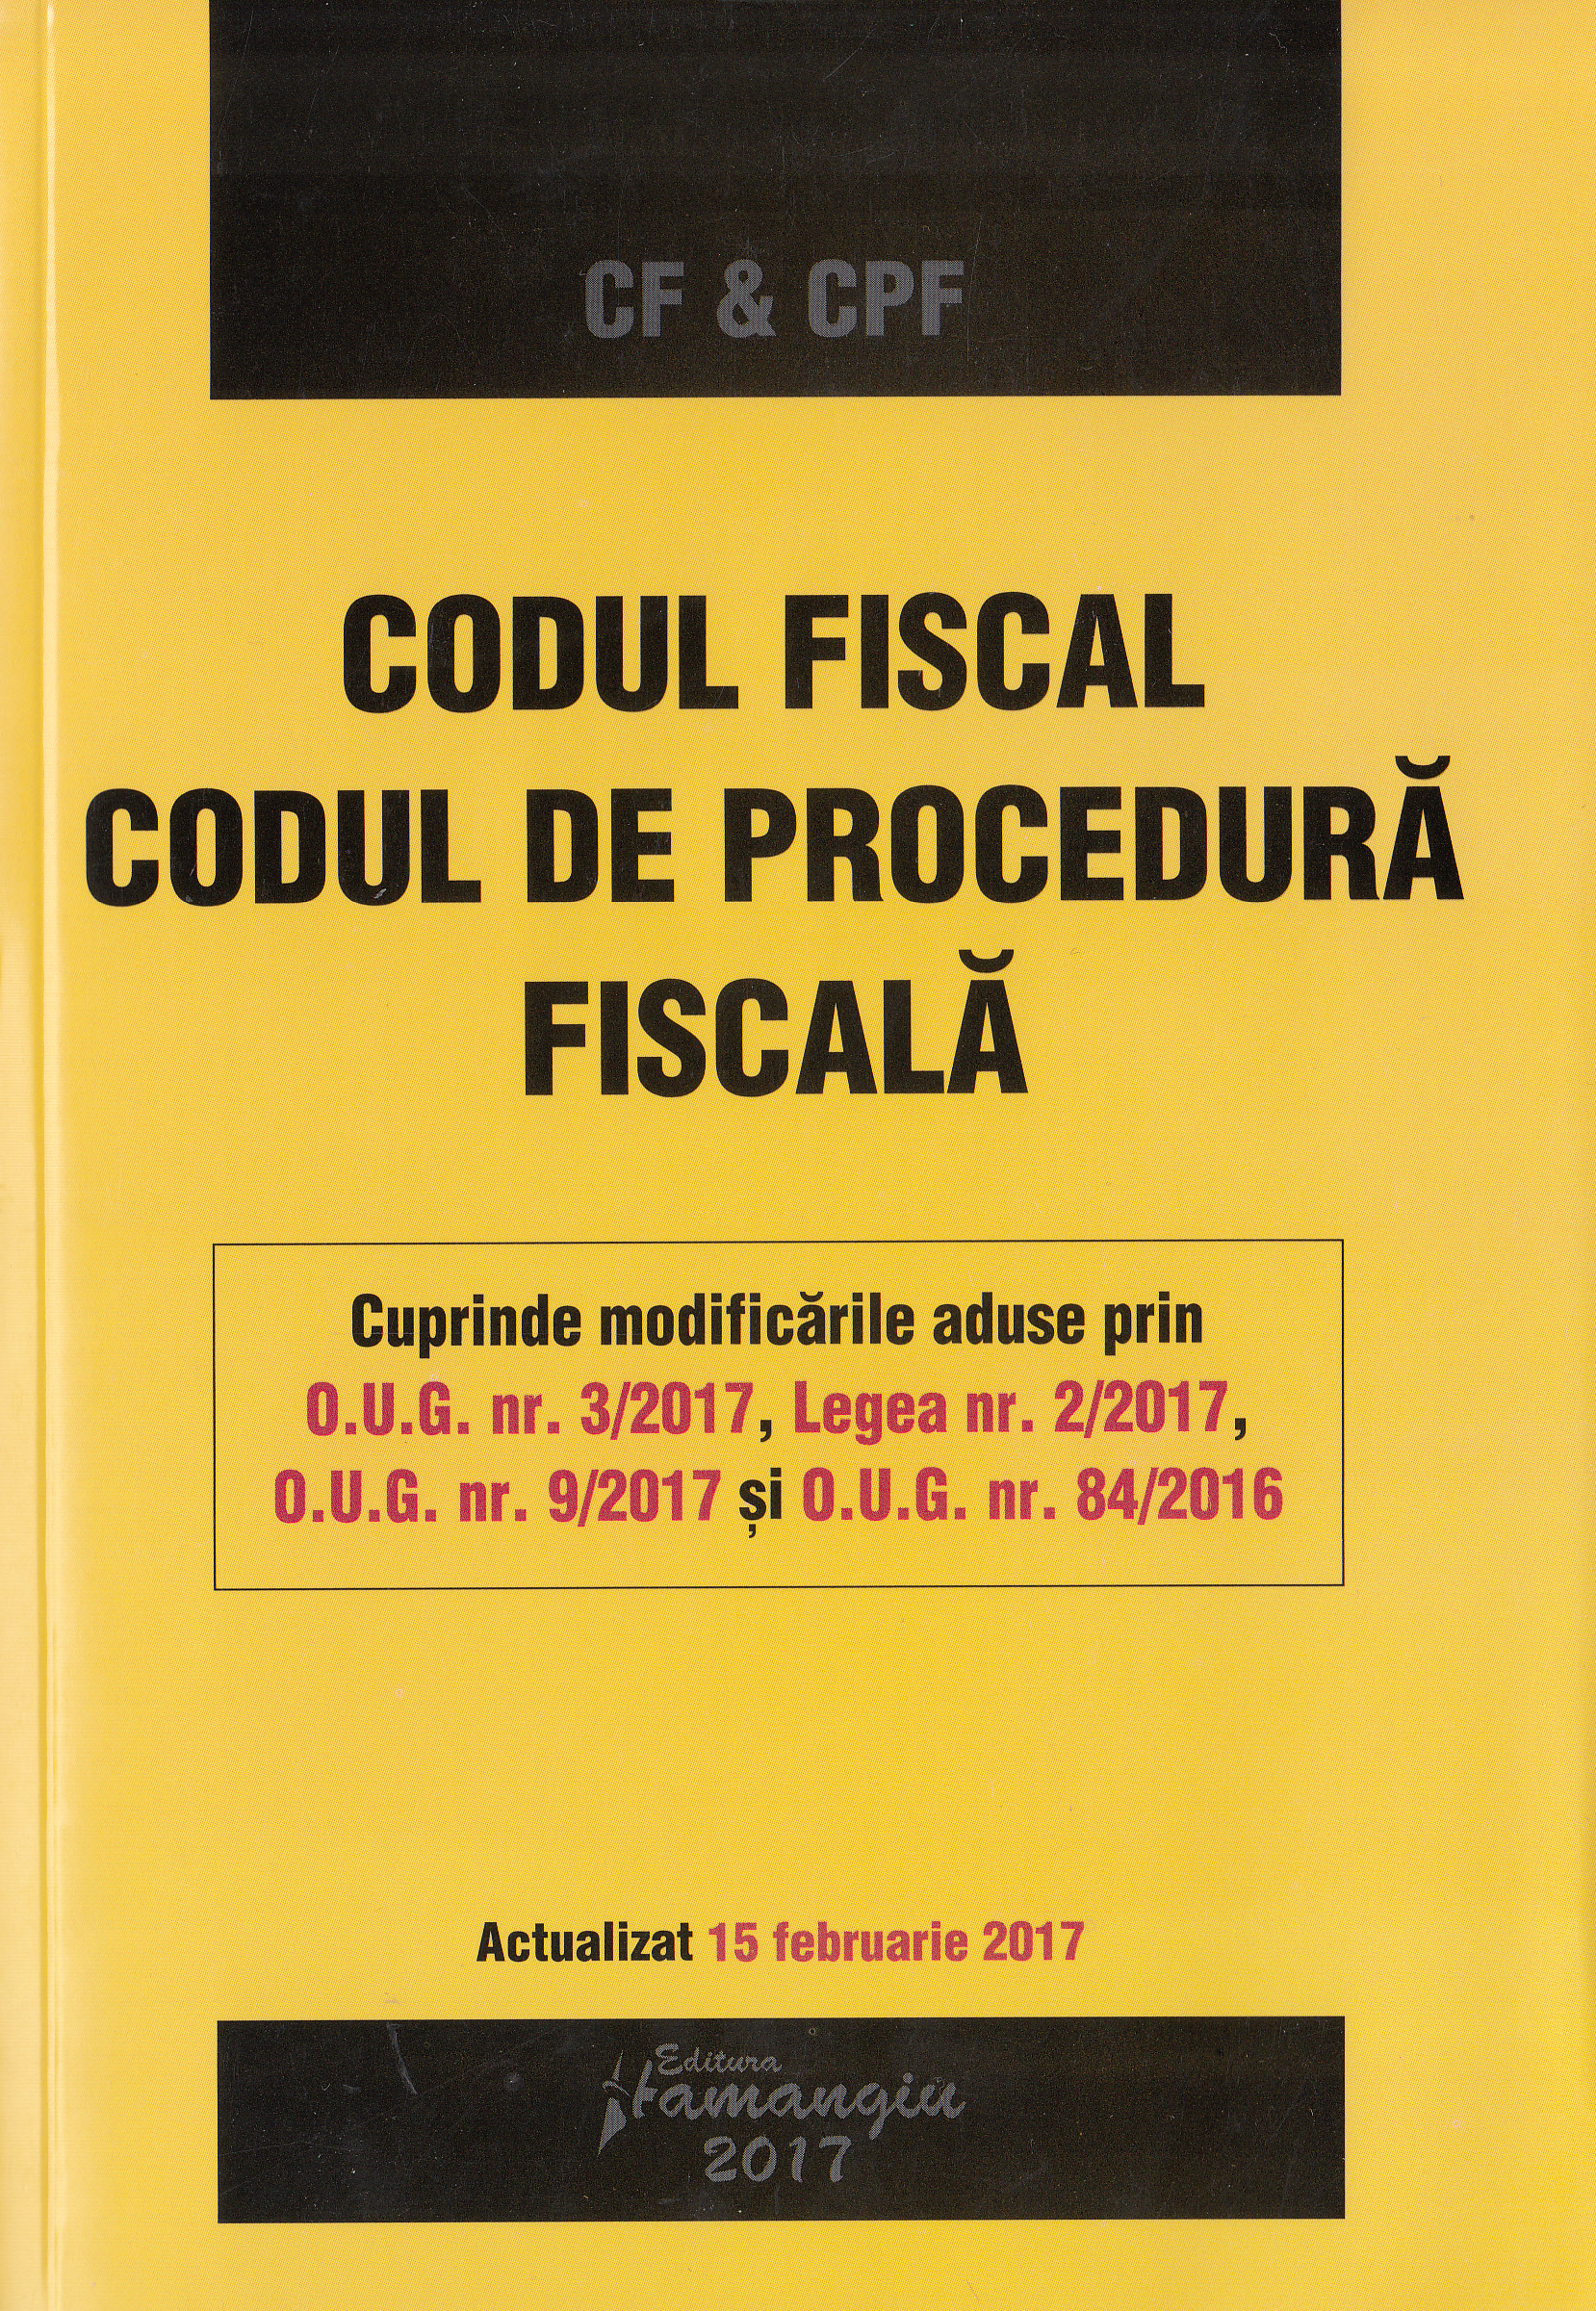 Codul fiscal. Codul de procedura fiscala Act. 15 februarie 2017